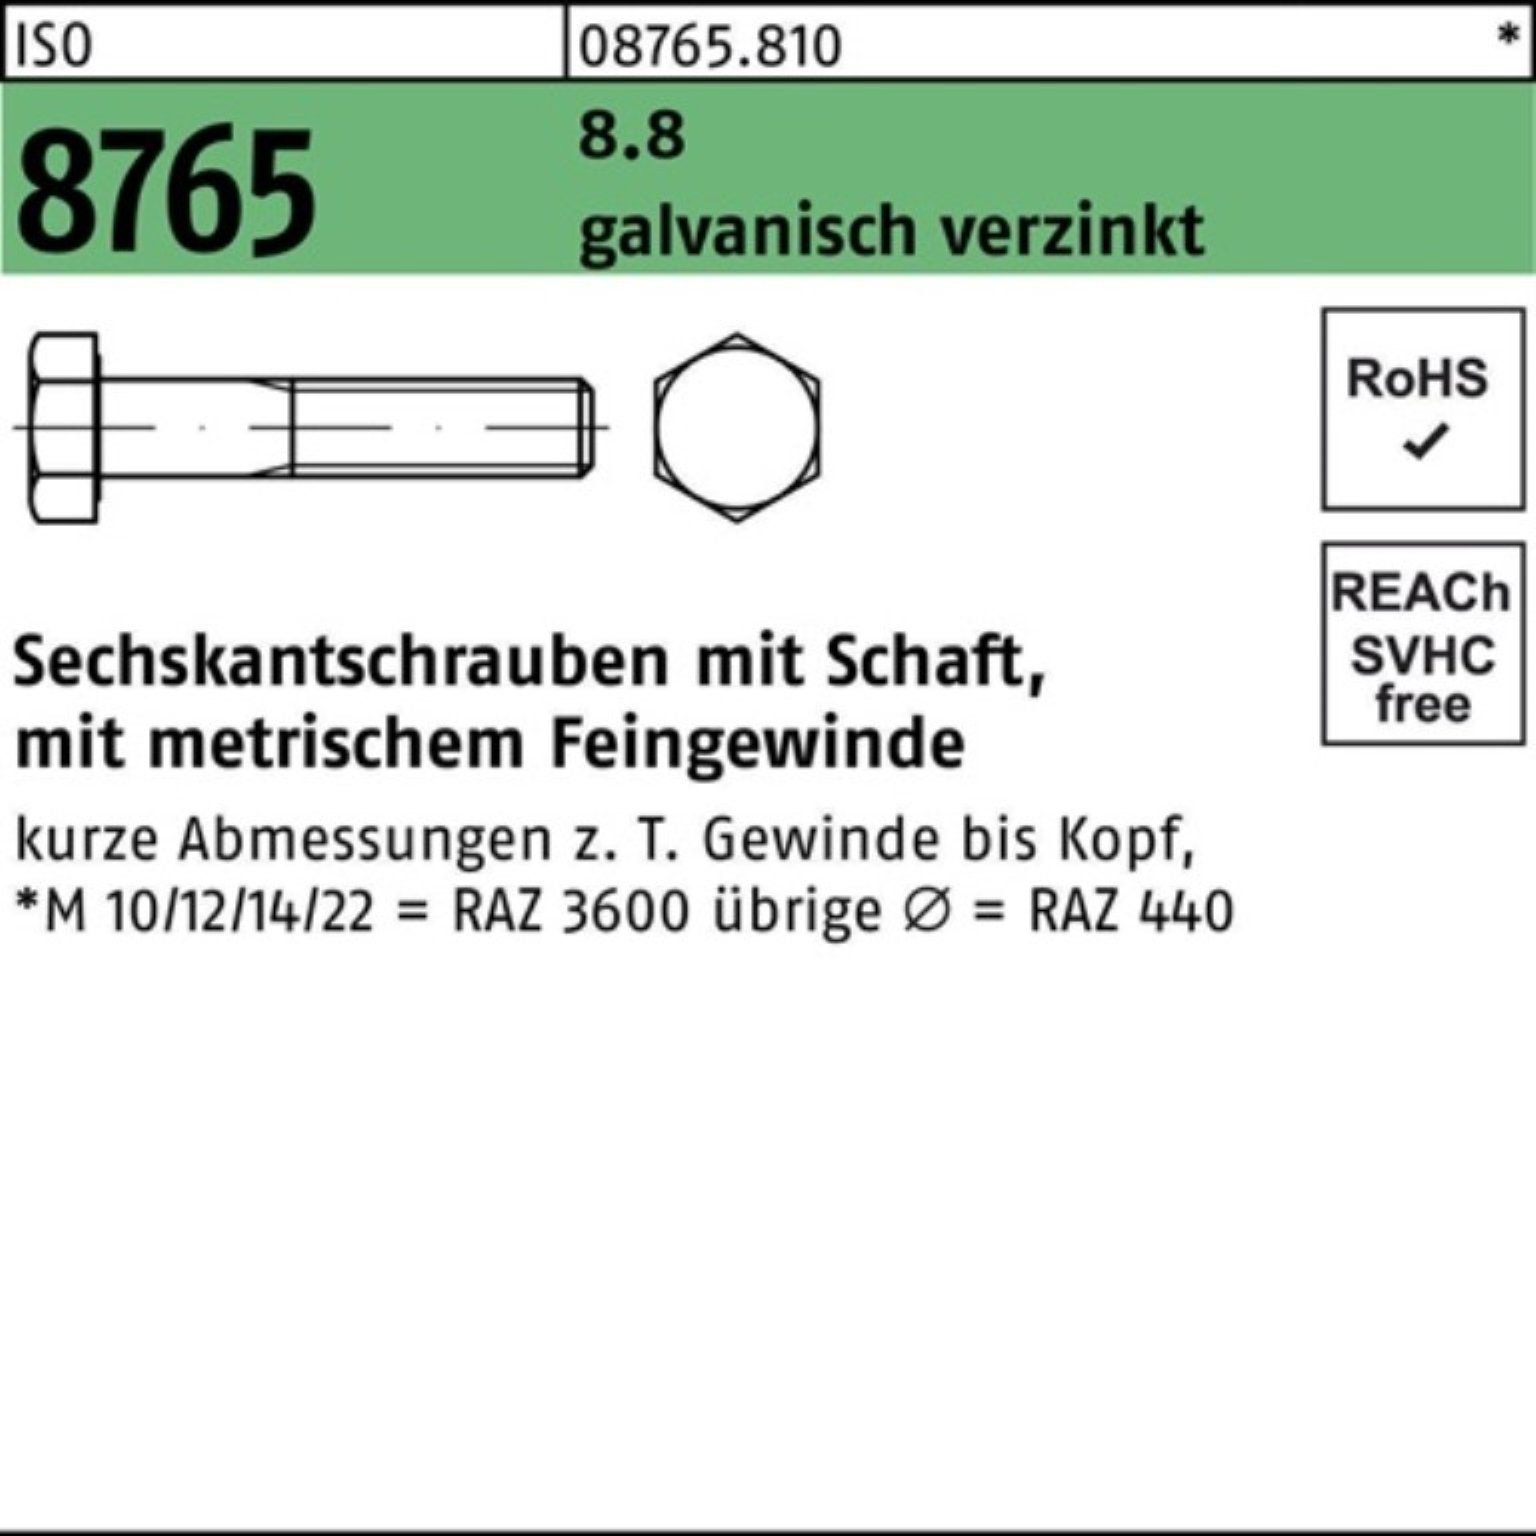 Reyher Sechskantschraube 100er Pack Sechskantschraube 8.8 8765 ISO M16x1,5x120 galv.verz Schaft